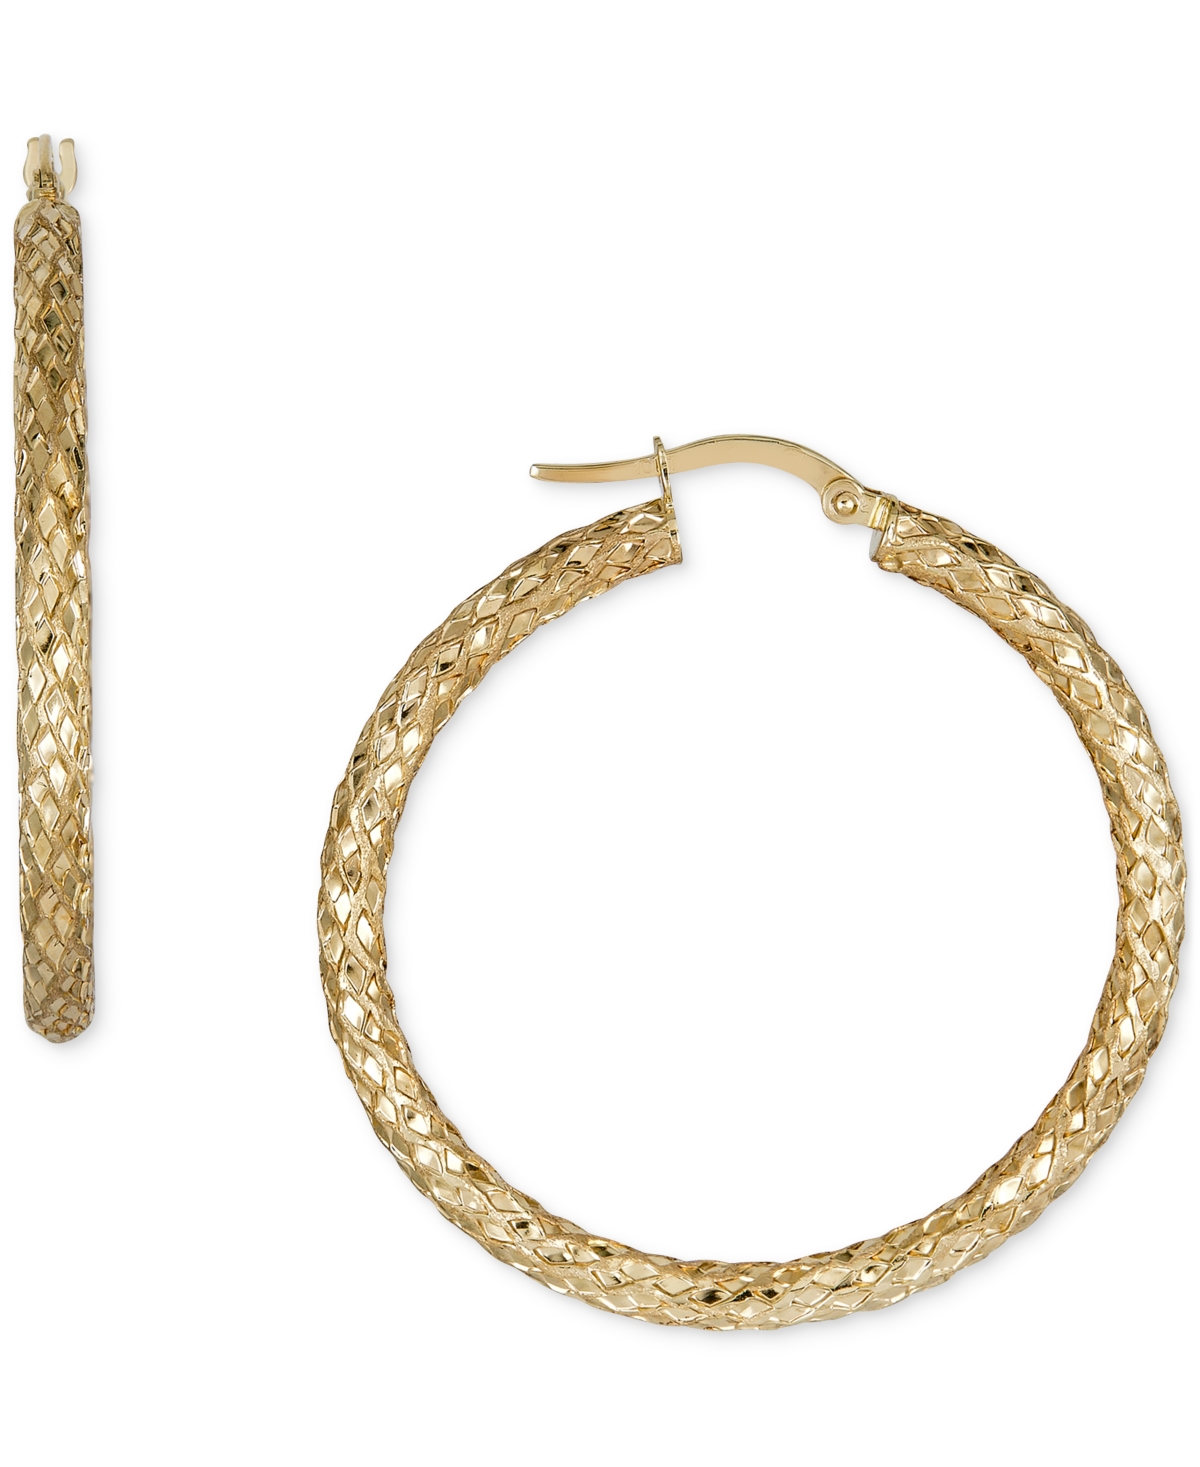 Snake Texture Hoop Earrings in 10k Gold 40mm - Yellow Gold